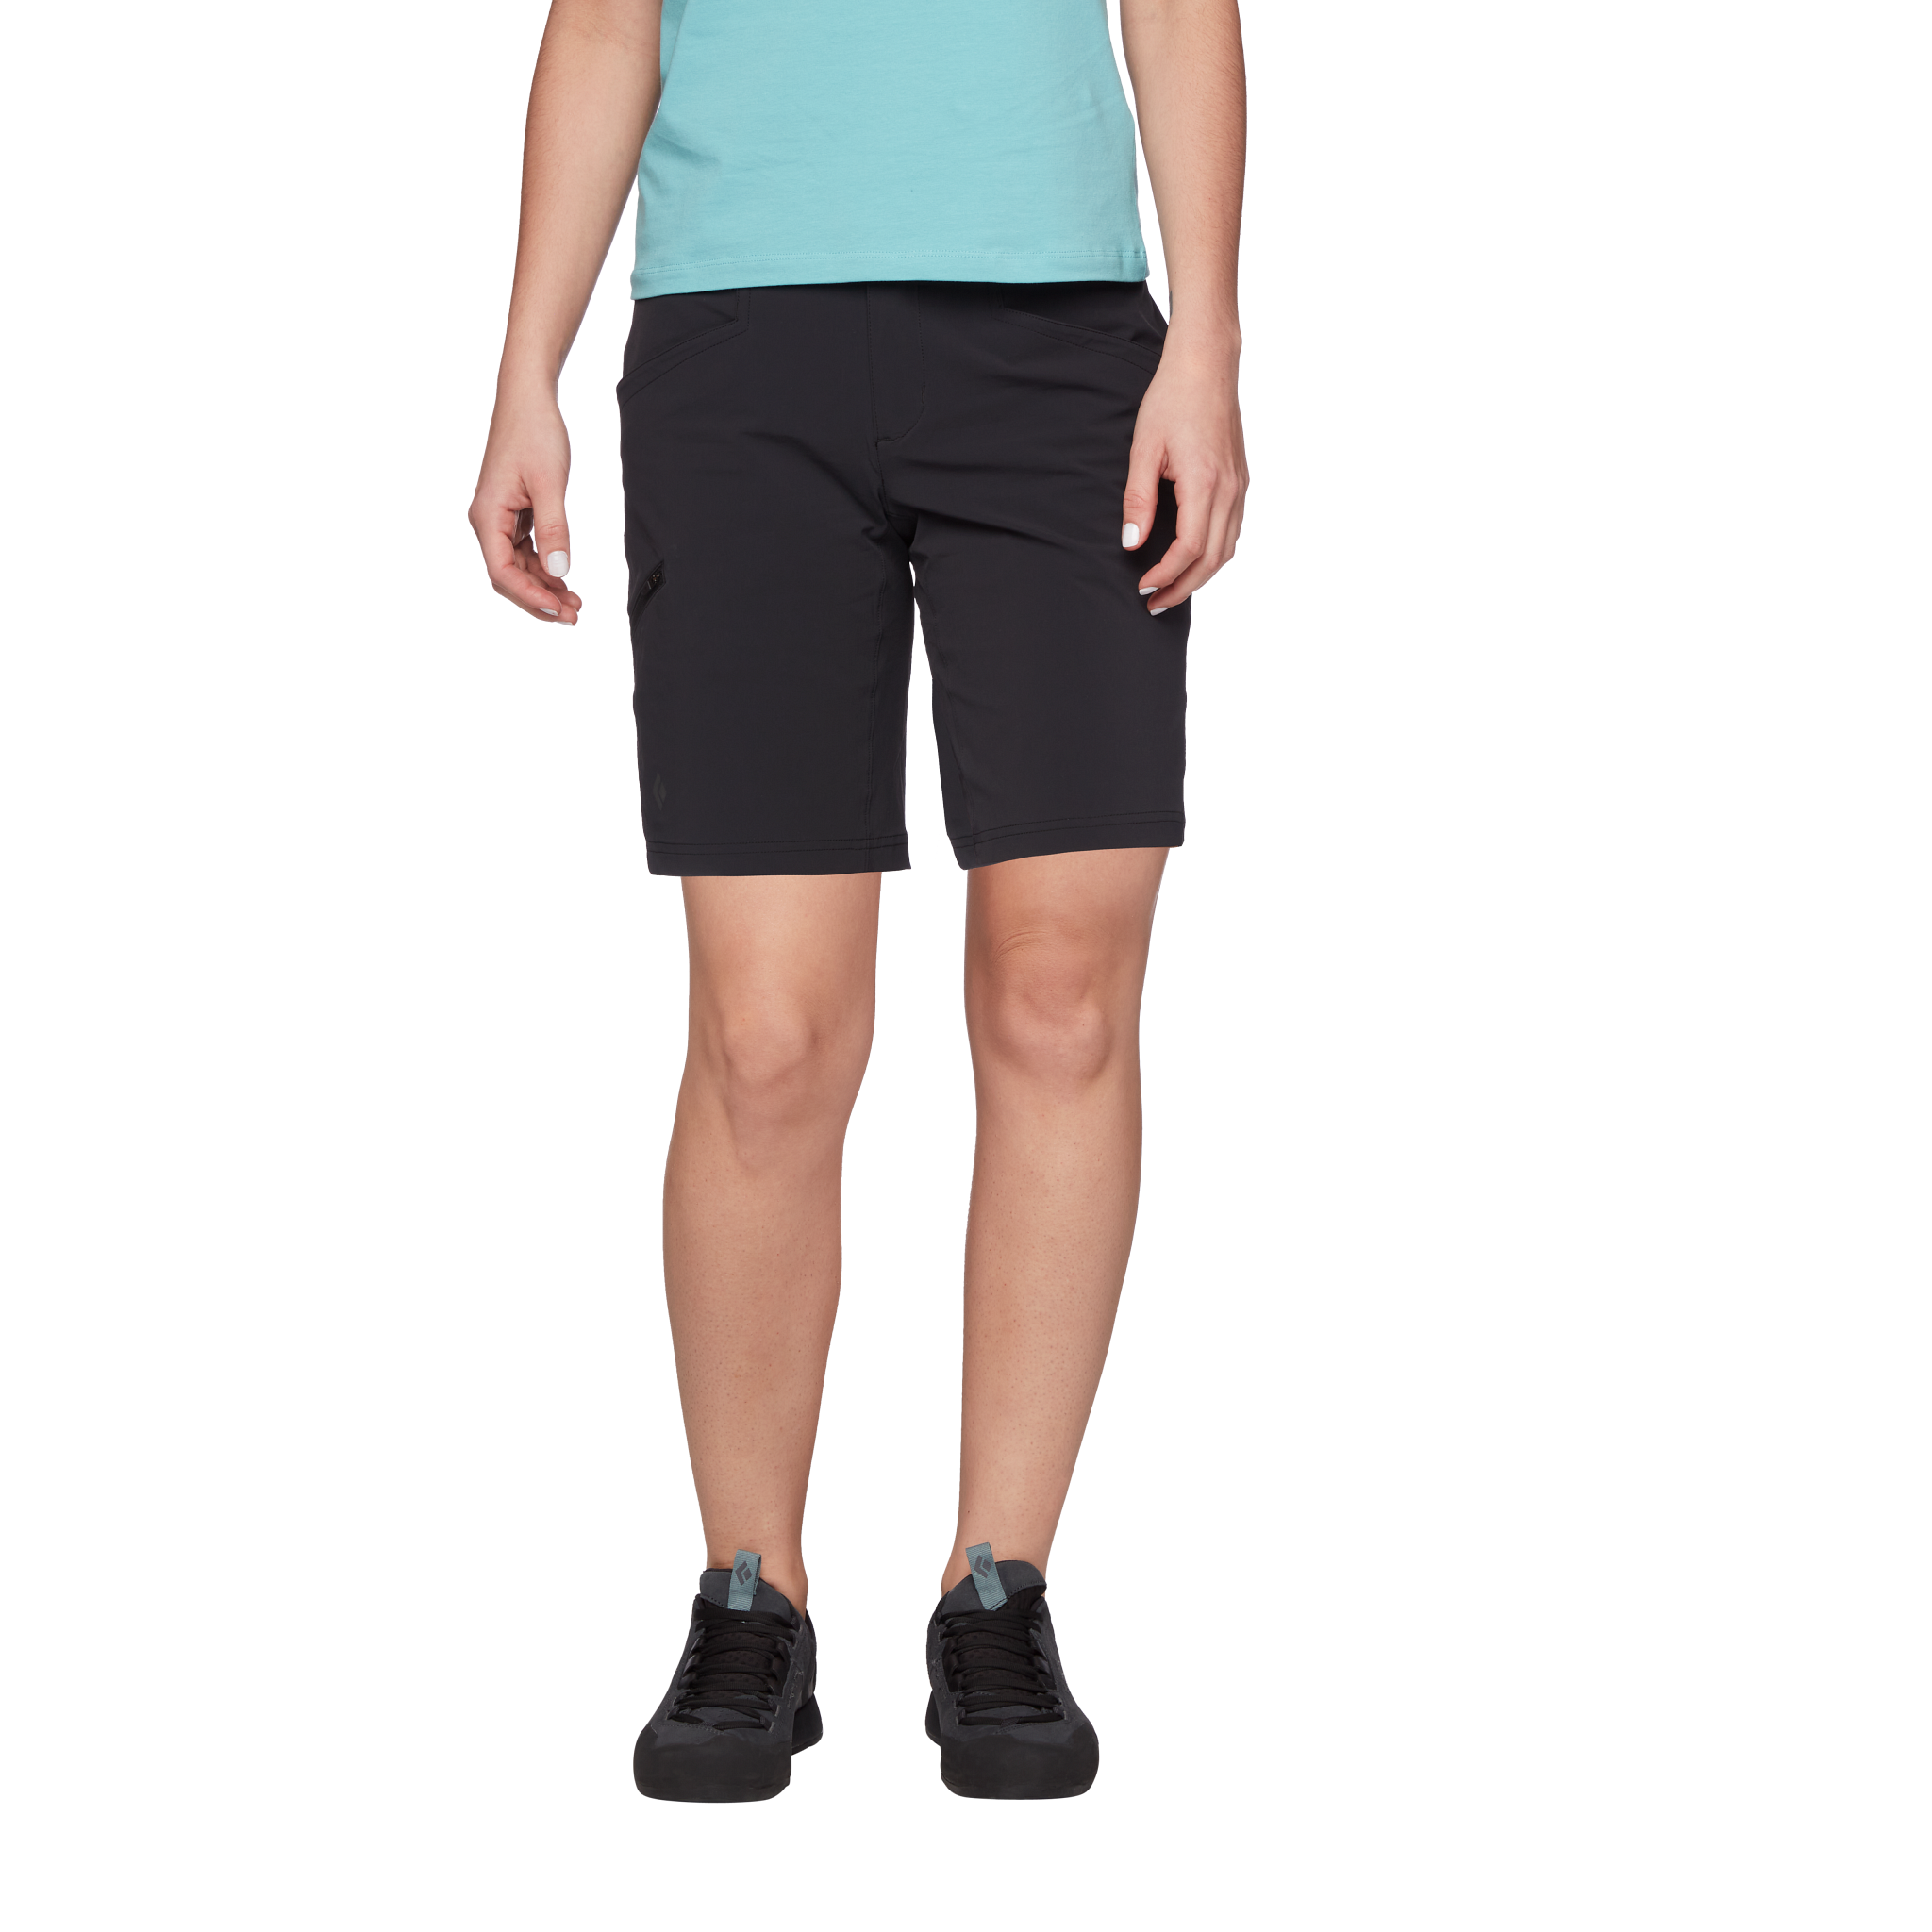 Black Diamond Equipment Women's Valley Shorts Size 4, in Black